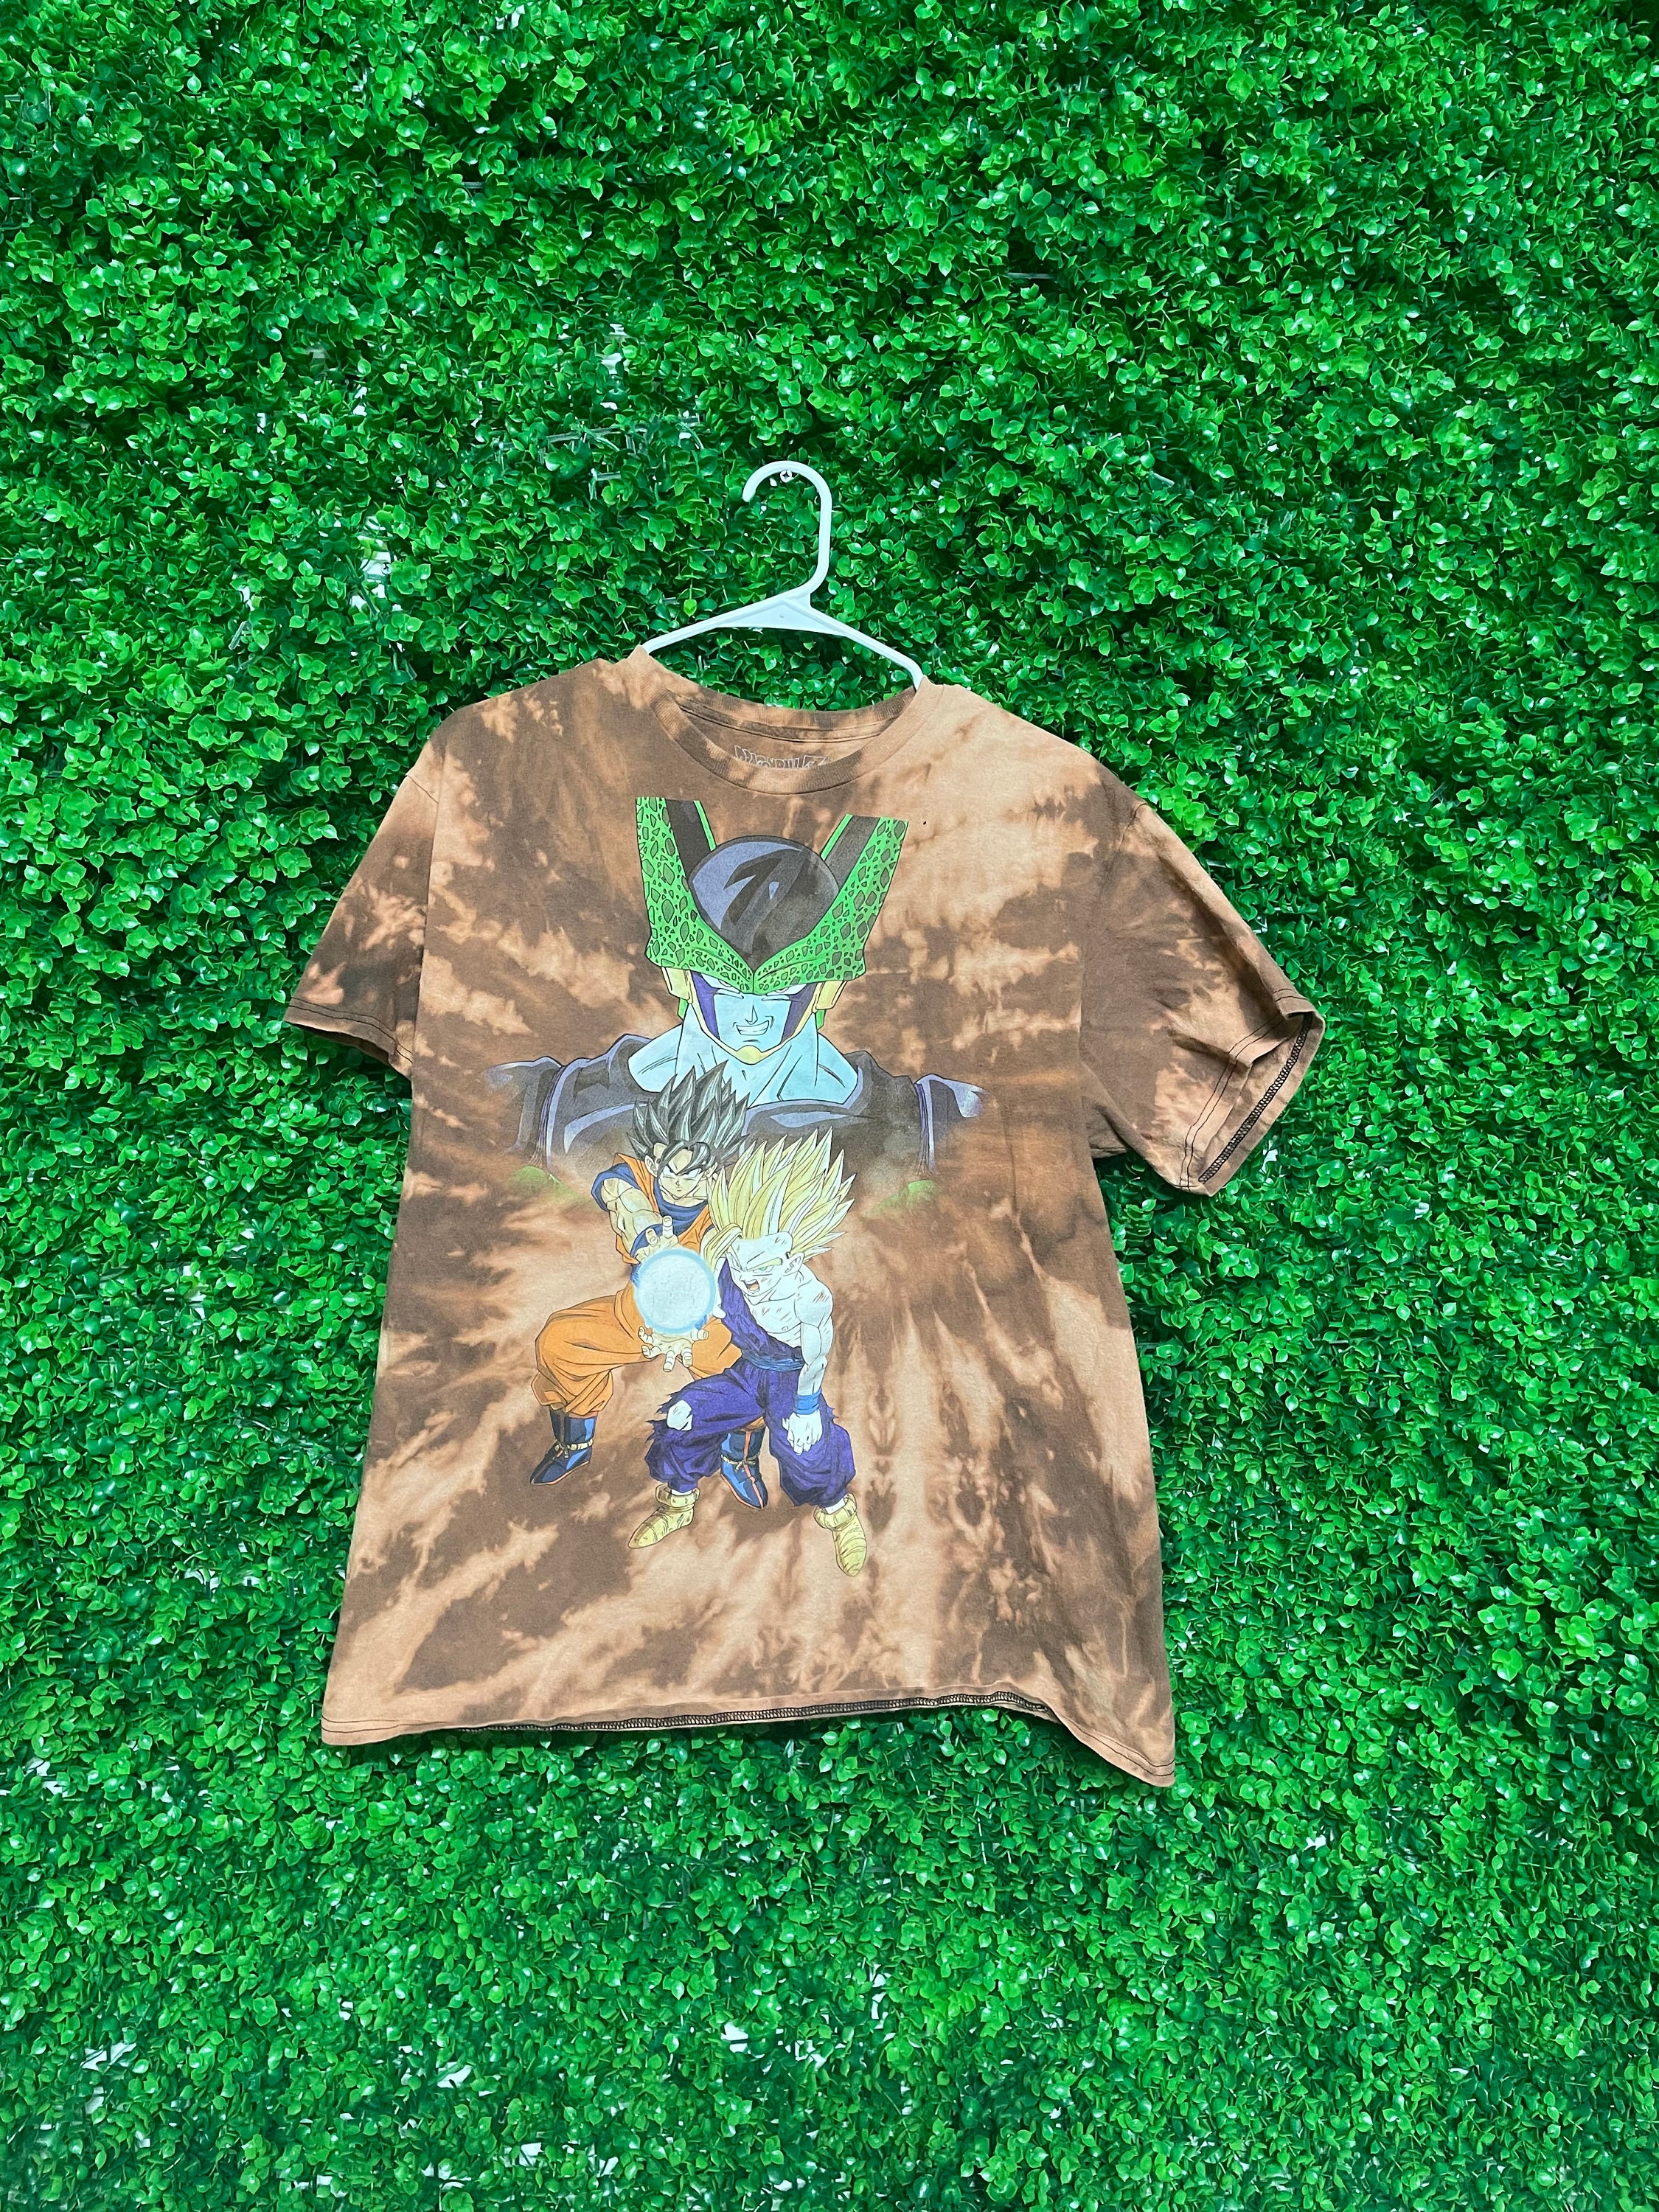 Aquaregia Acid Anime T-Shirt